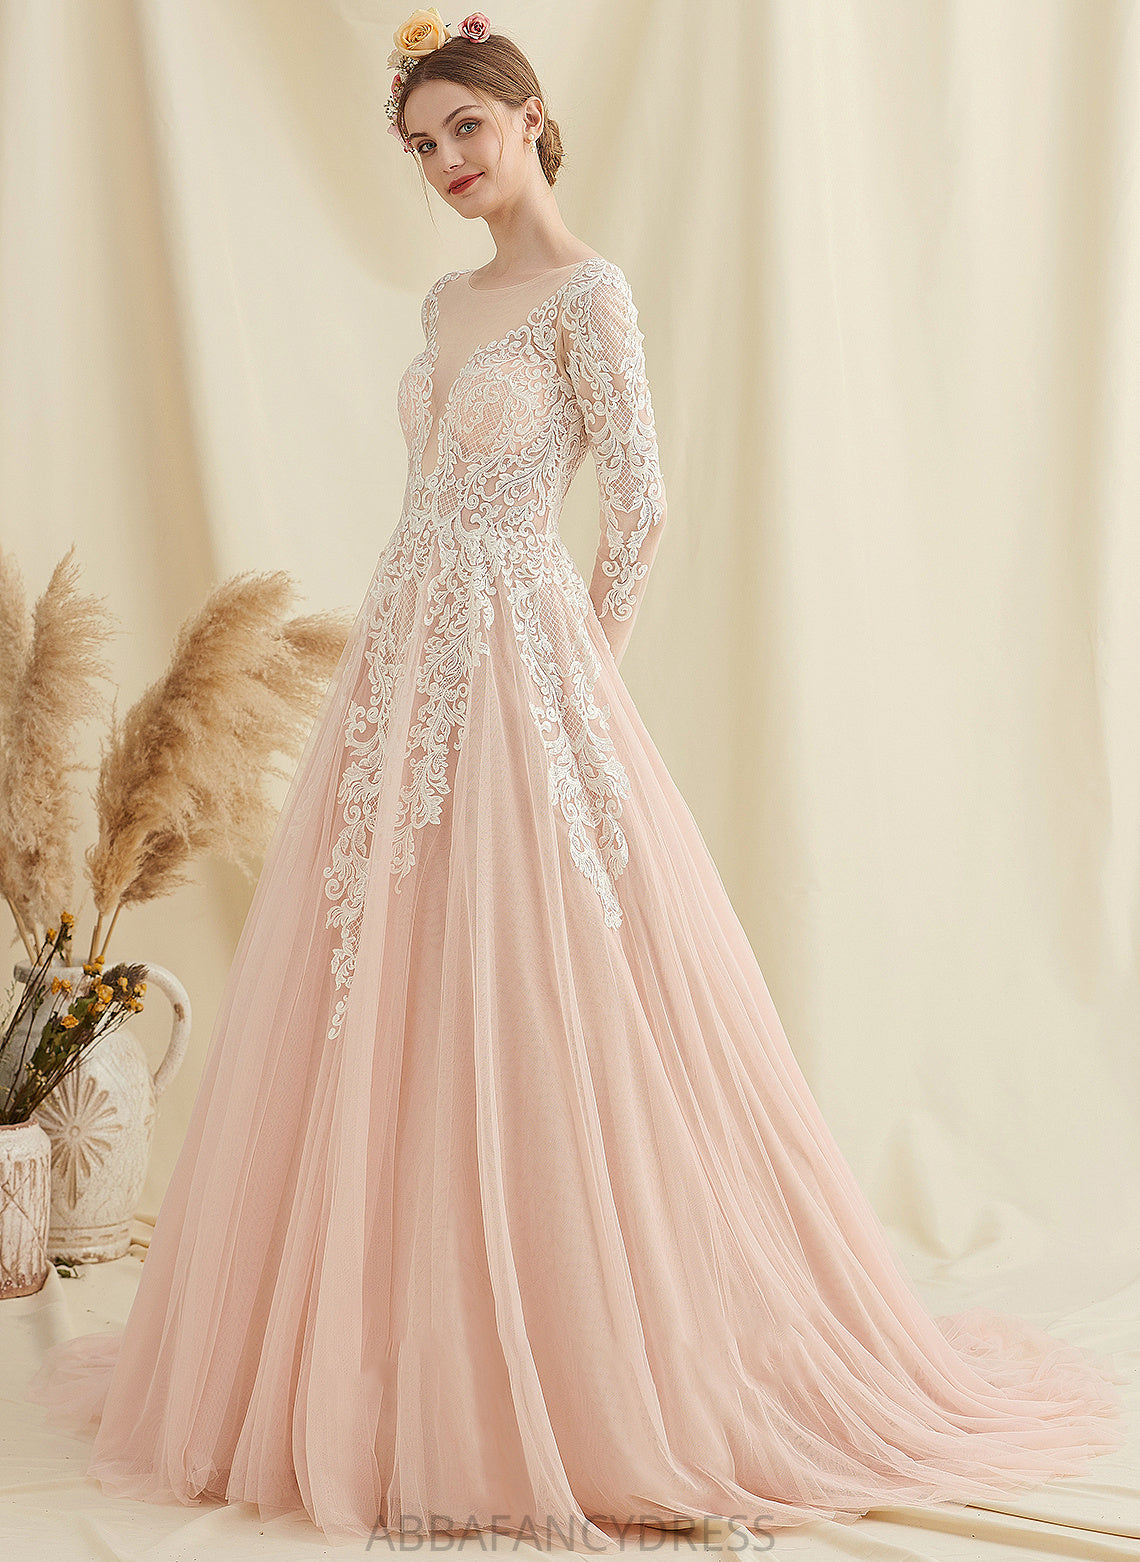 Wedding Dresses Neck Ball-Gown/Princess Wedding Scoop Lace Dress Court Kiera Train Tulle